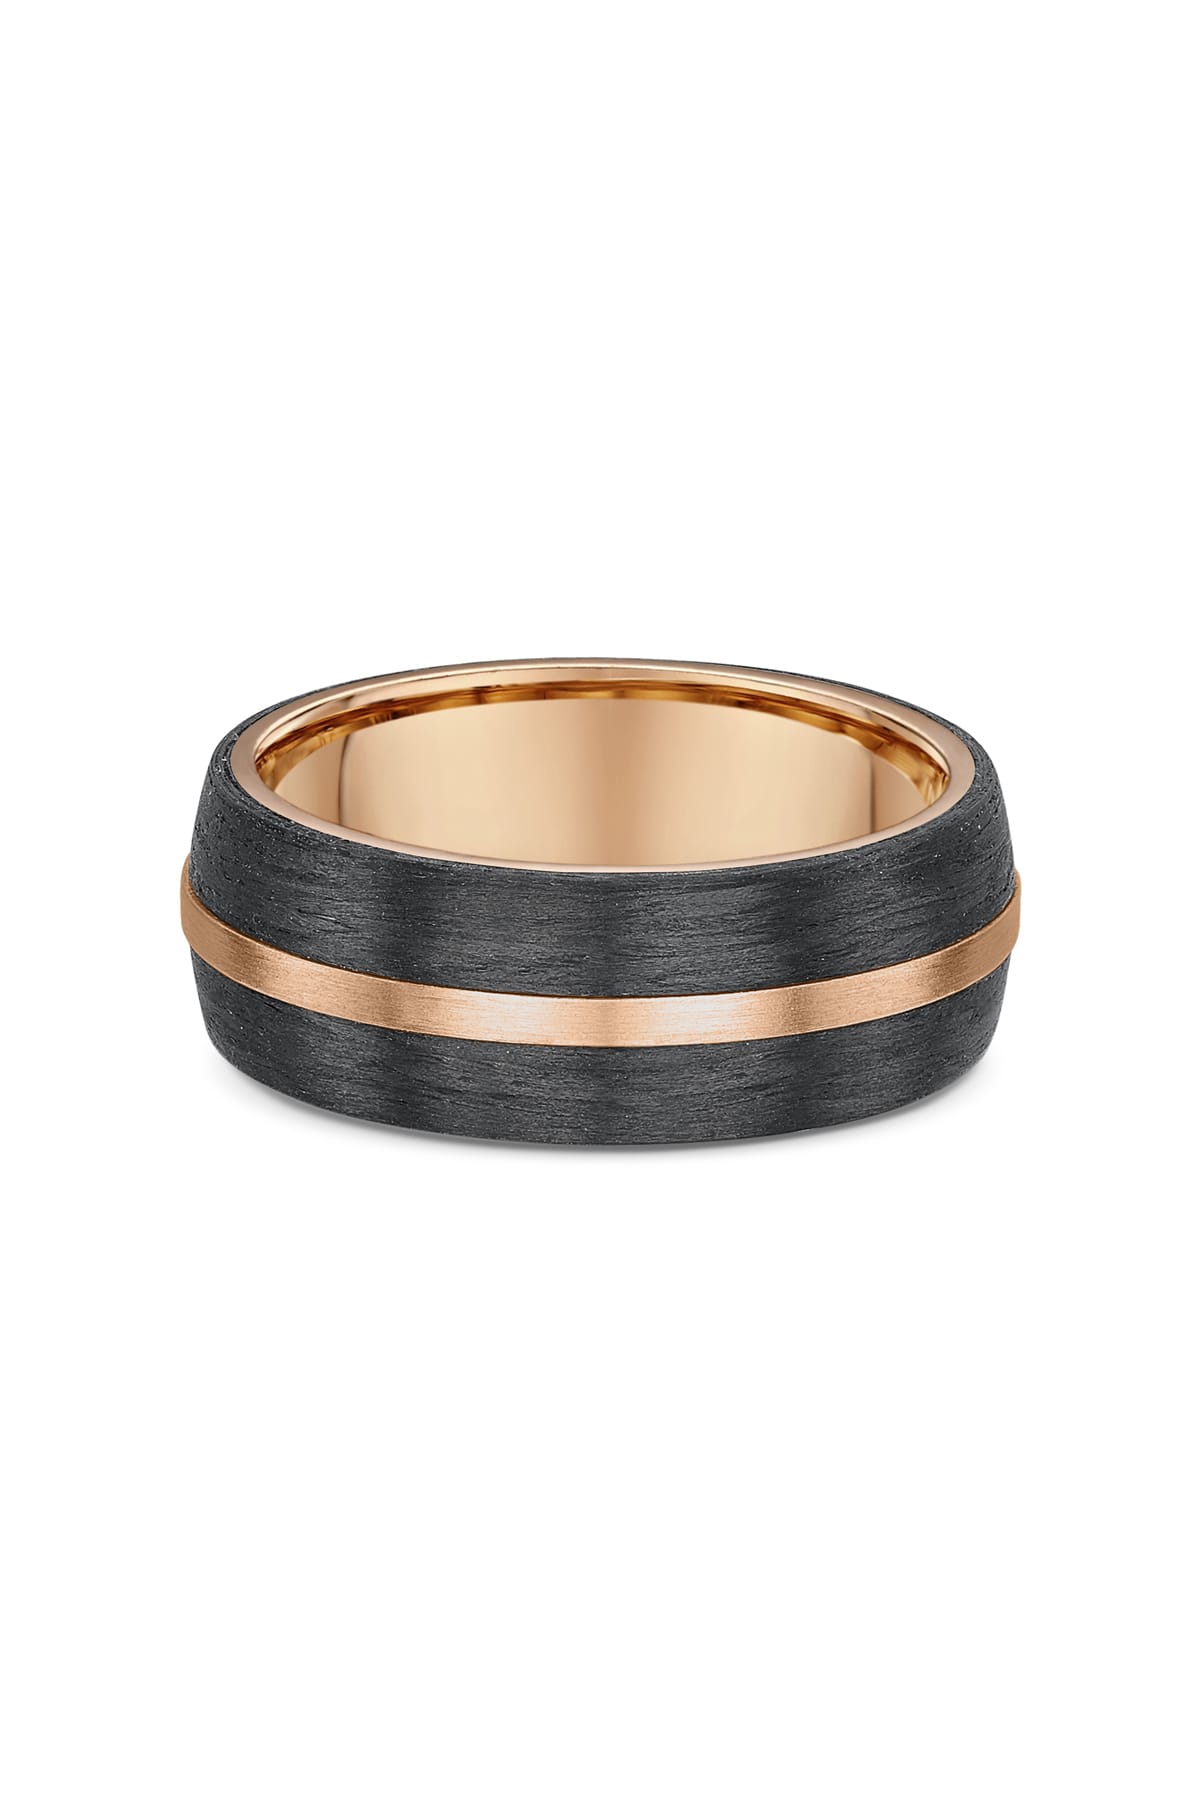 Men's Wedding Ring 657B00 available at LeGassick Diamonds and Jewellery Gold Coast, Australia.